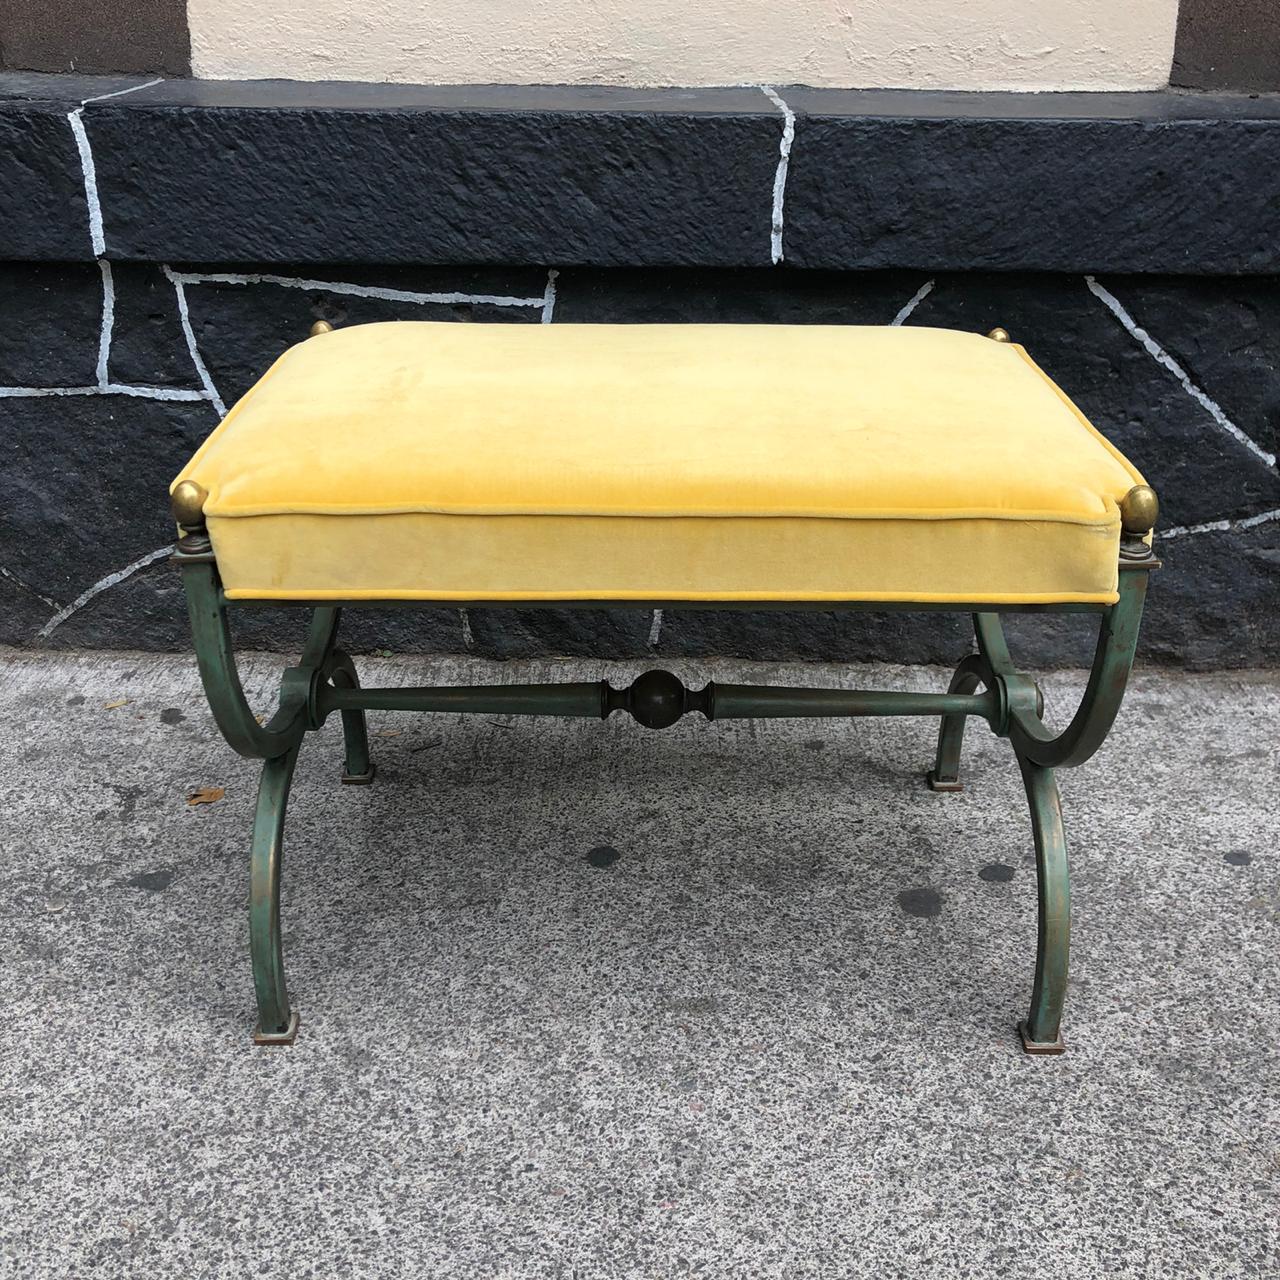 Arturo Pani Patinated Steel Stool with Yellow Upholstery 1